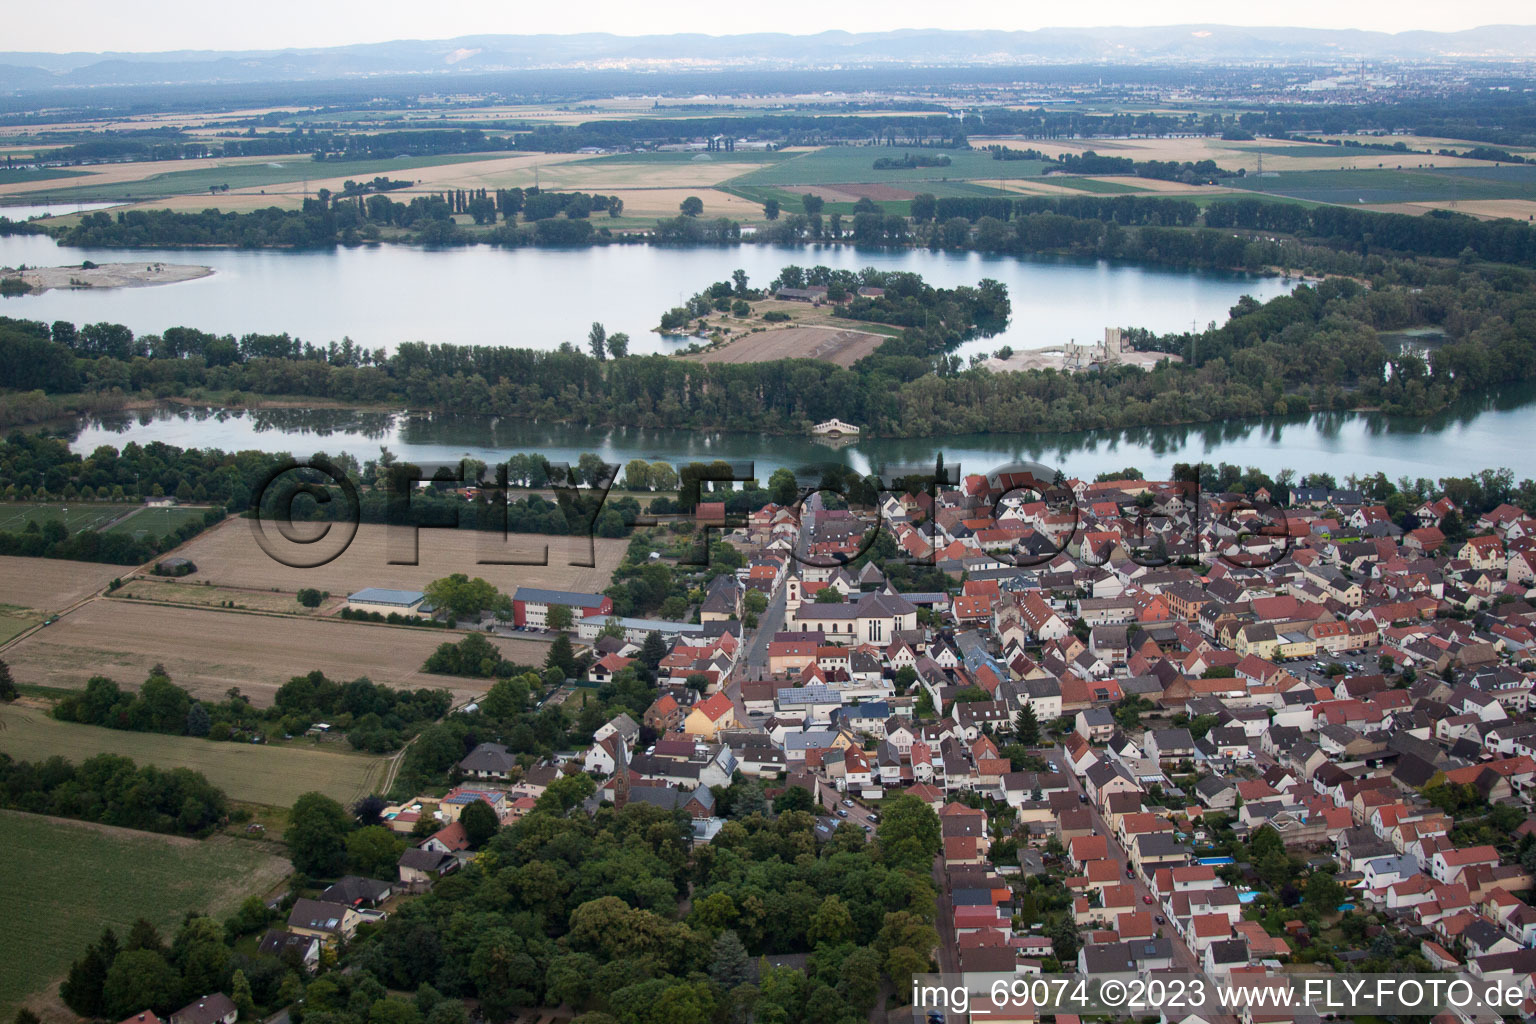 District Roxheim in Bobenheim-Roxheim in the state Rhineland-Palatinate, Germany from the plane